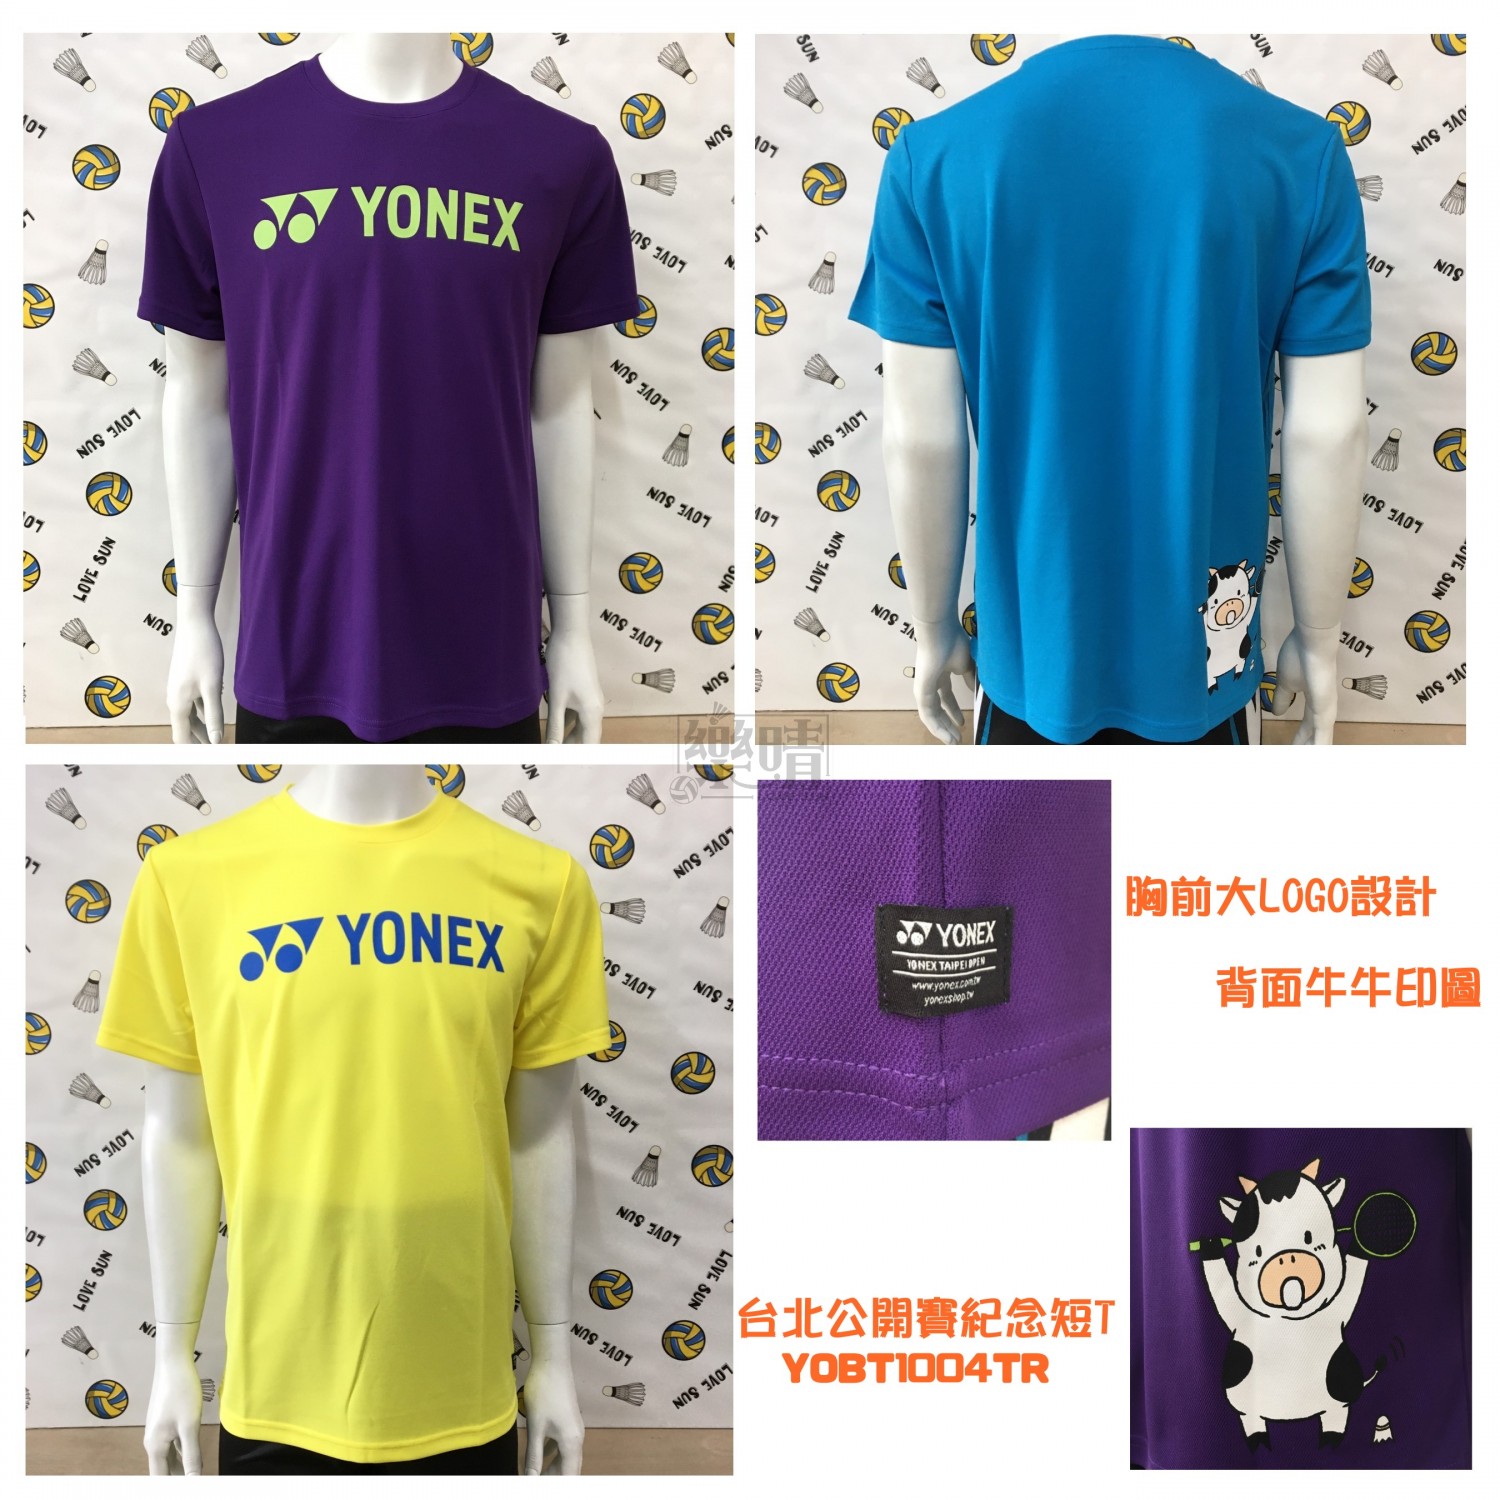 YONEX 短袖 YOBT1004TR